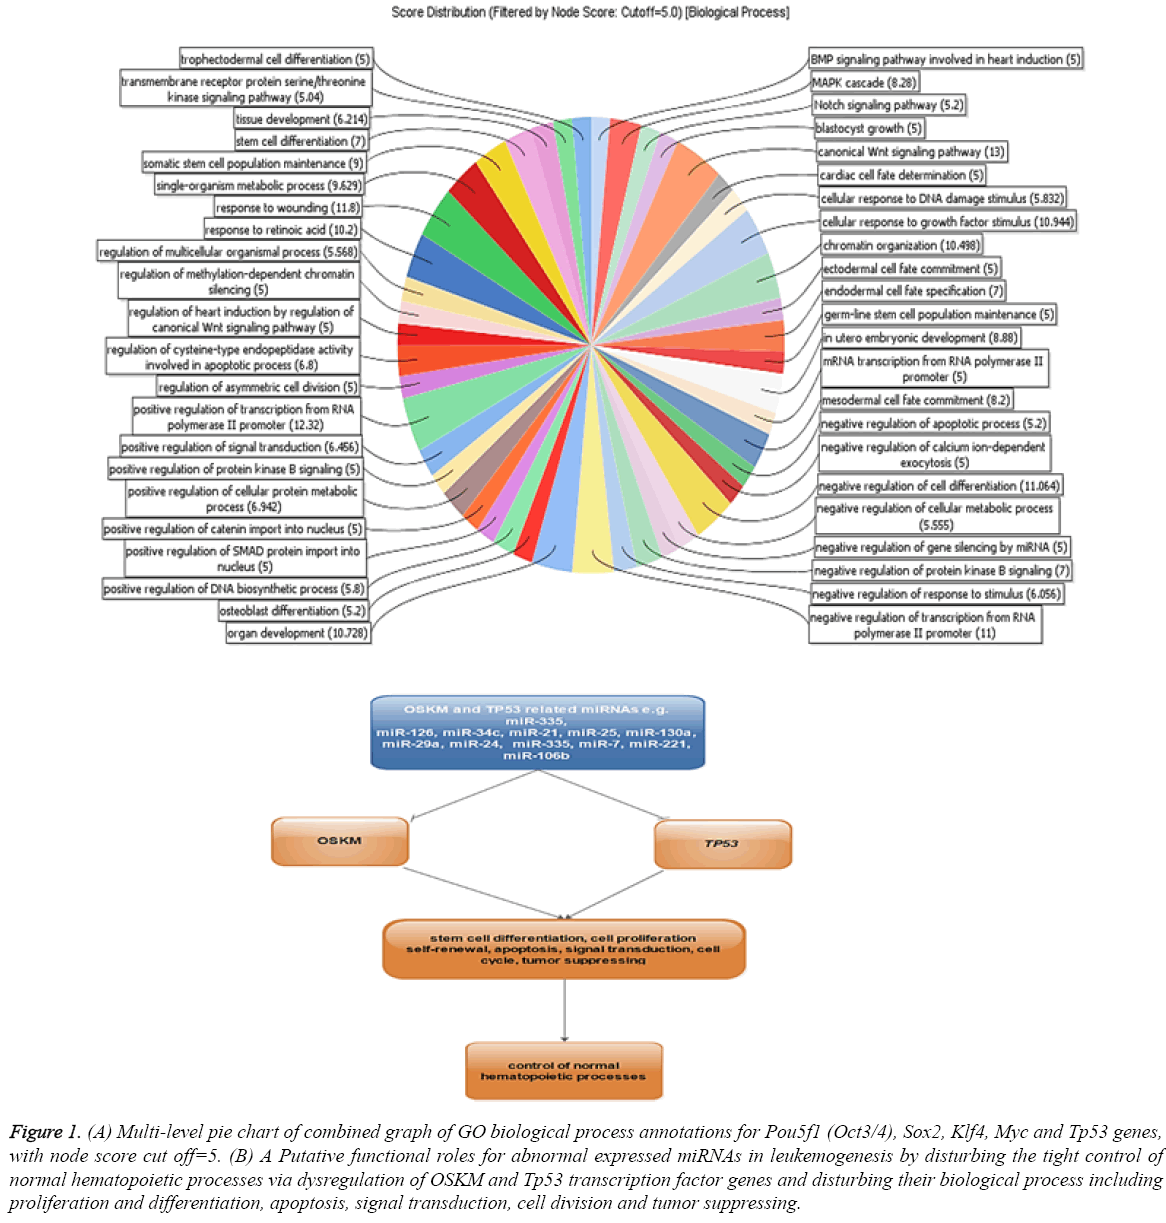 biomedres-Multi-level-pie-chart